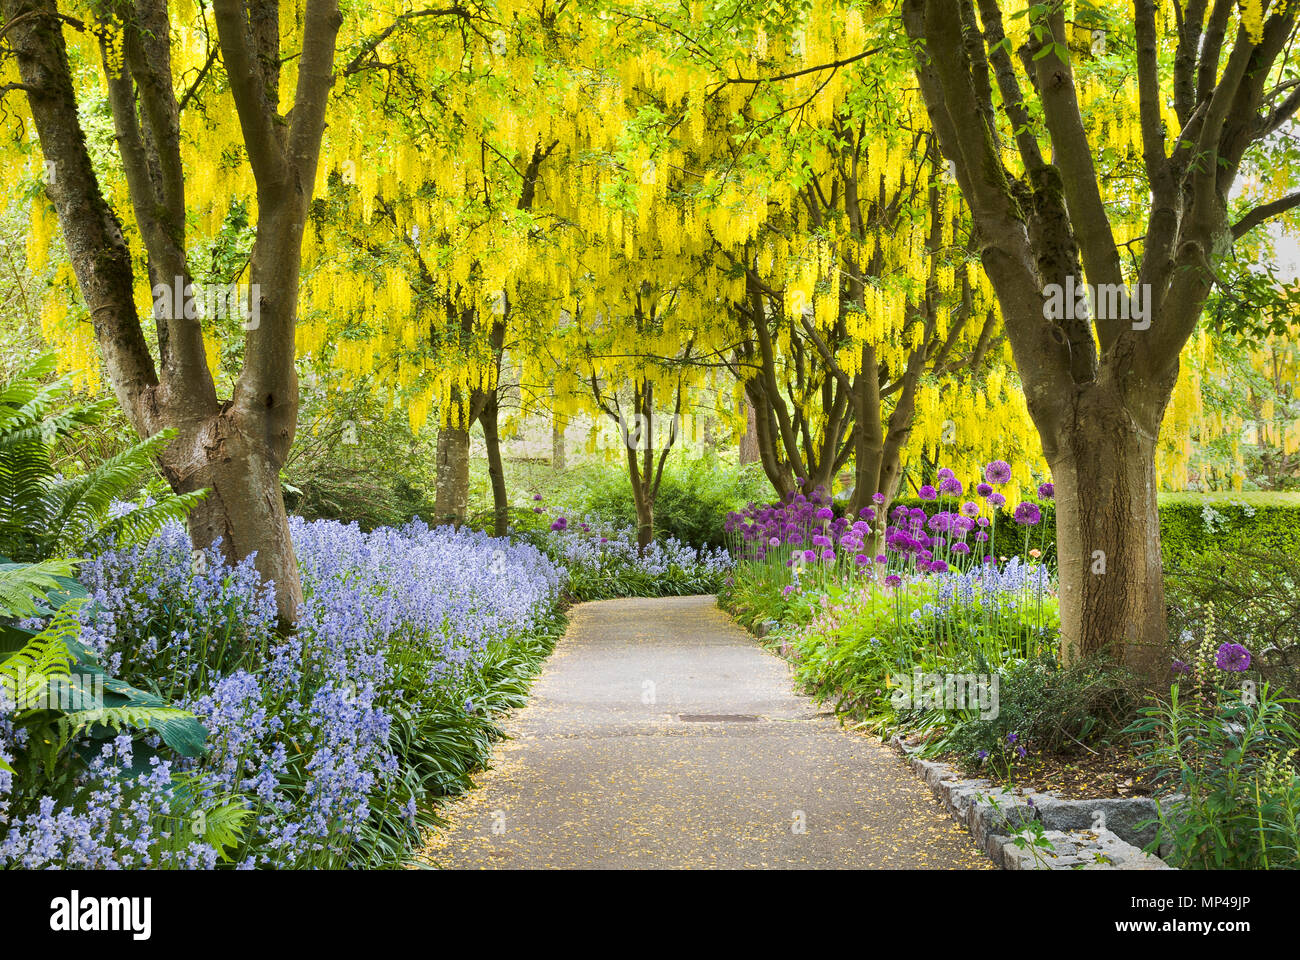 Floraison jaune arbres Laburnum, jacinthes et Allium purple blooms, marcher, Laburnum Vandusen Botanical Garden, Vancouver, British Columbia, Canada Banque D'Images